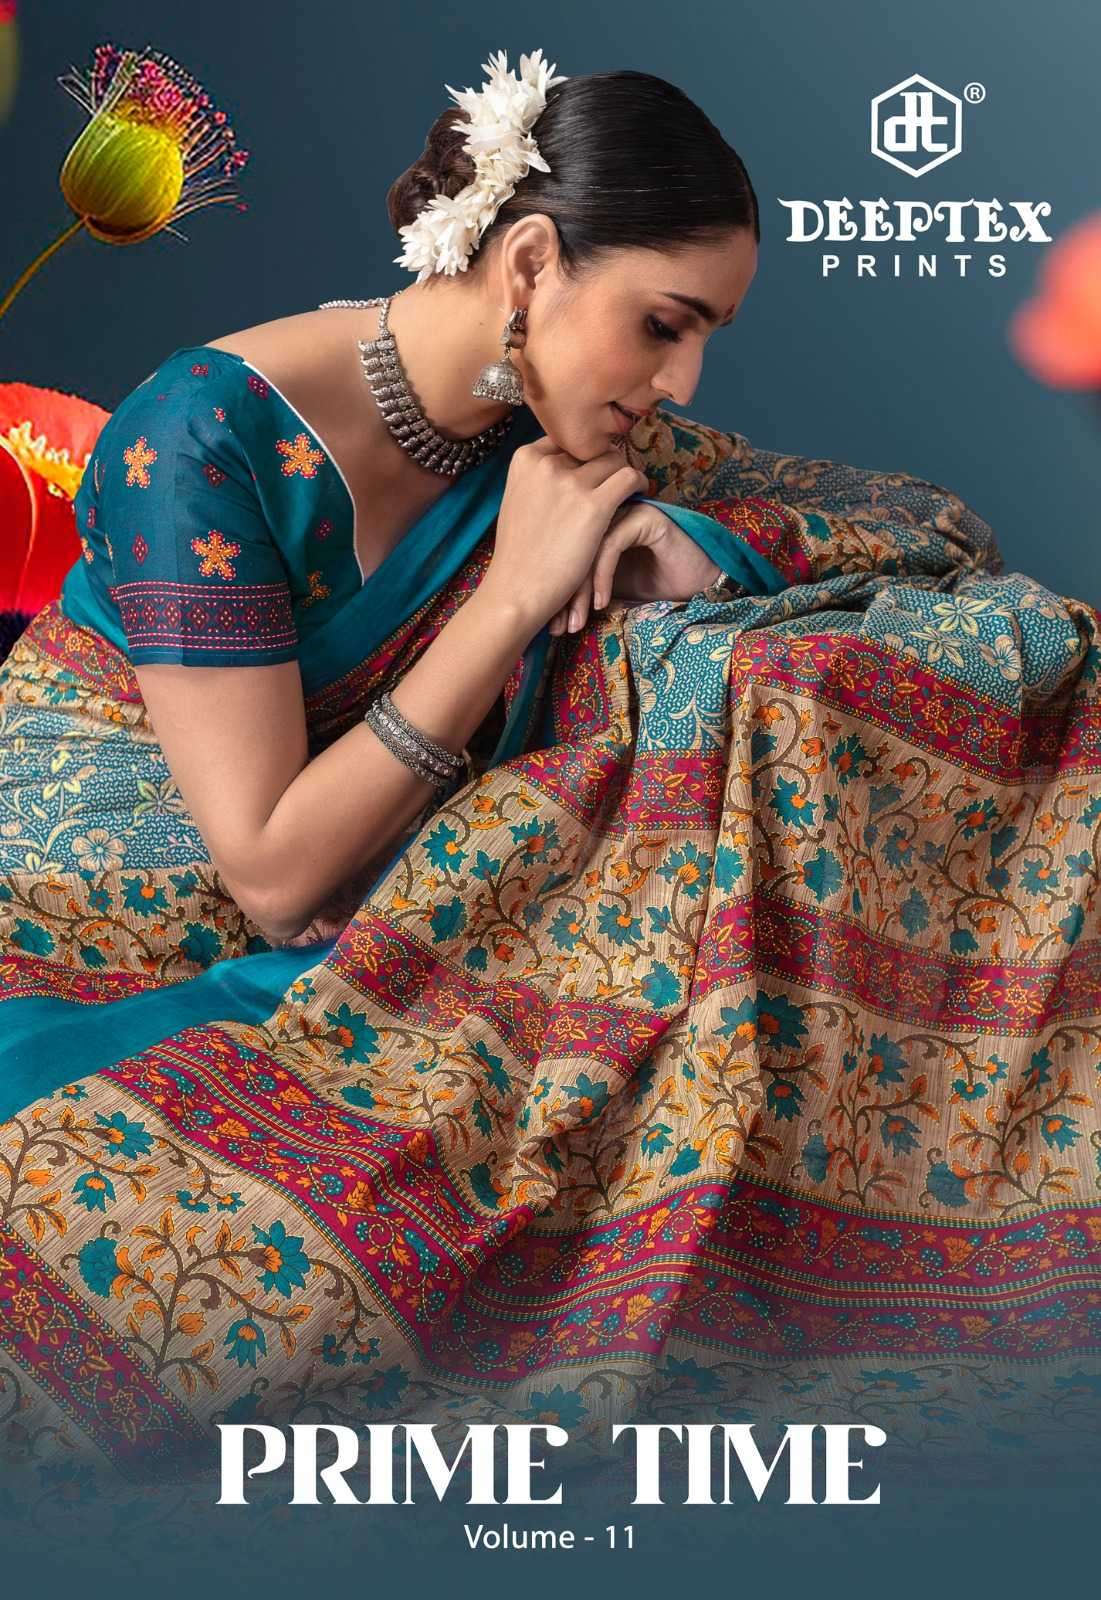 deeptex prints prime time vol 11 series 1101-1109 Pure cotton sarees